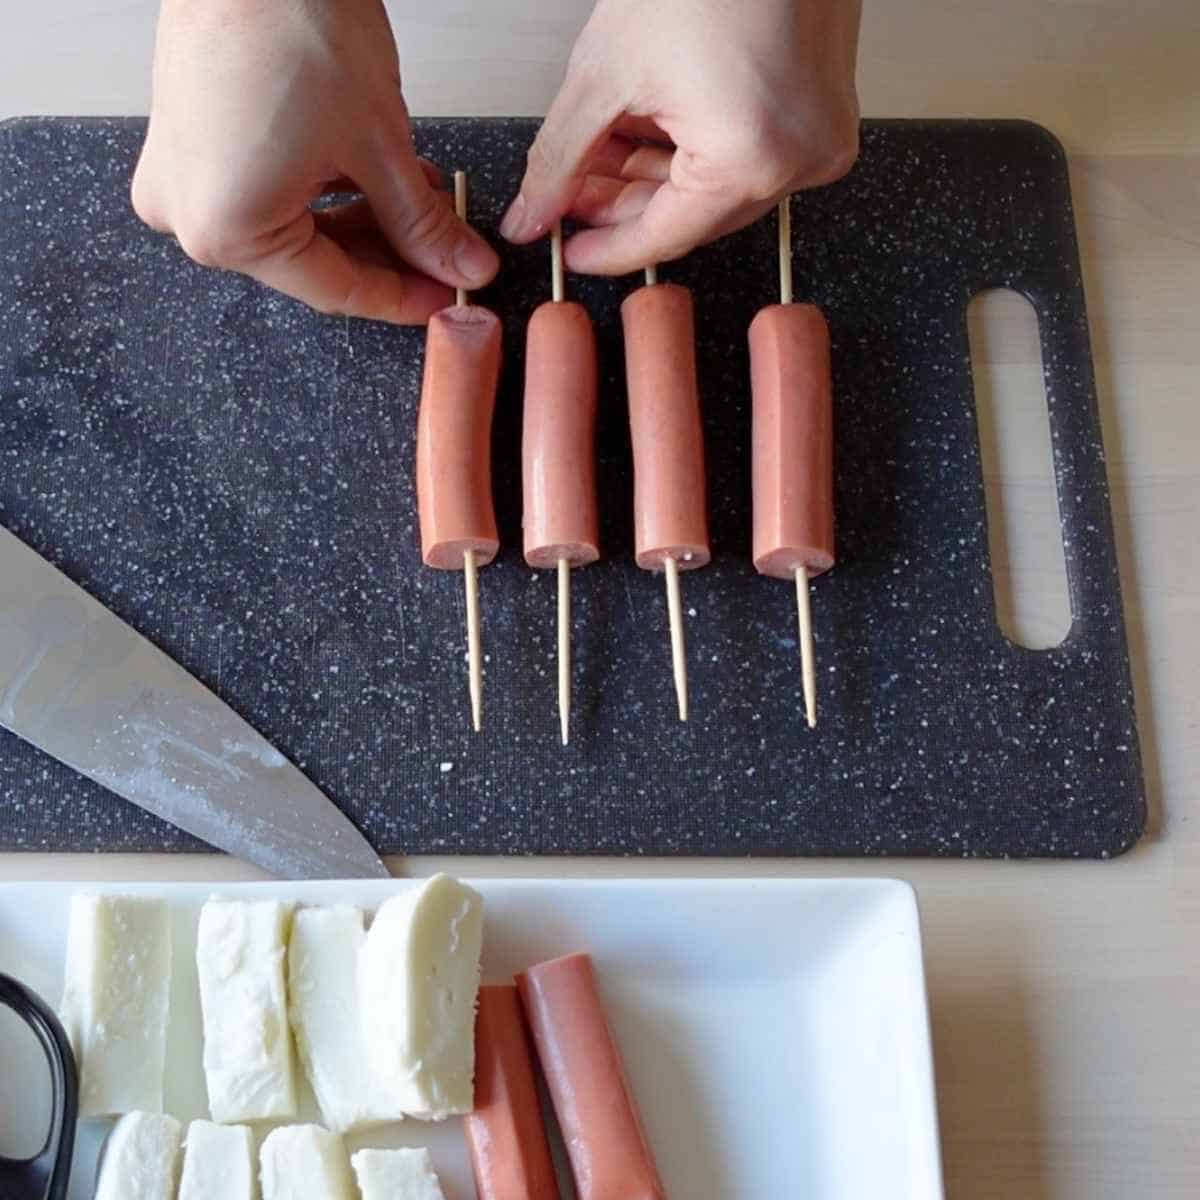 Hot dog on skewers